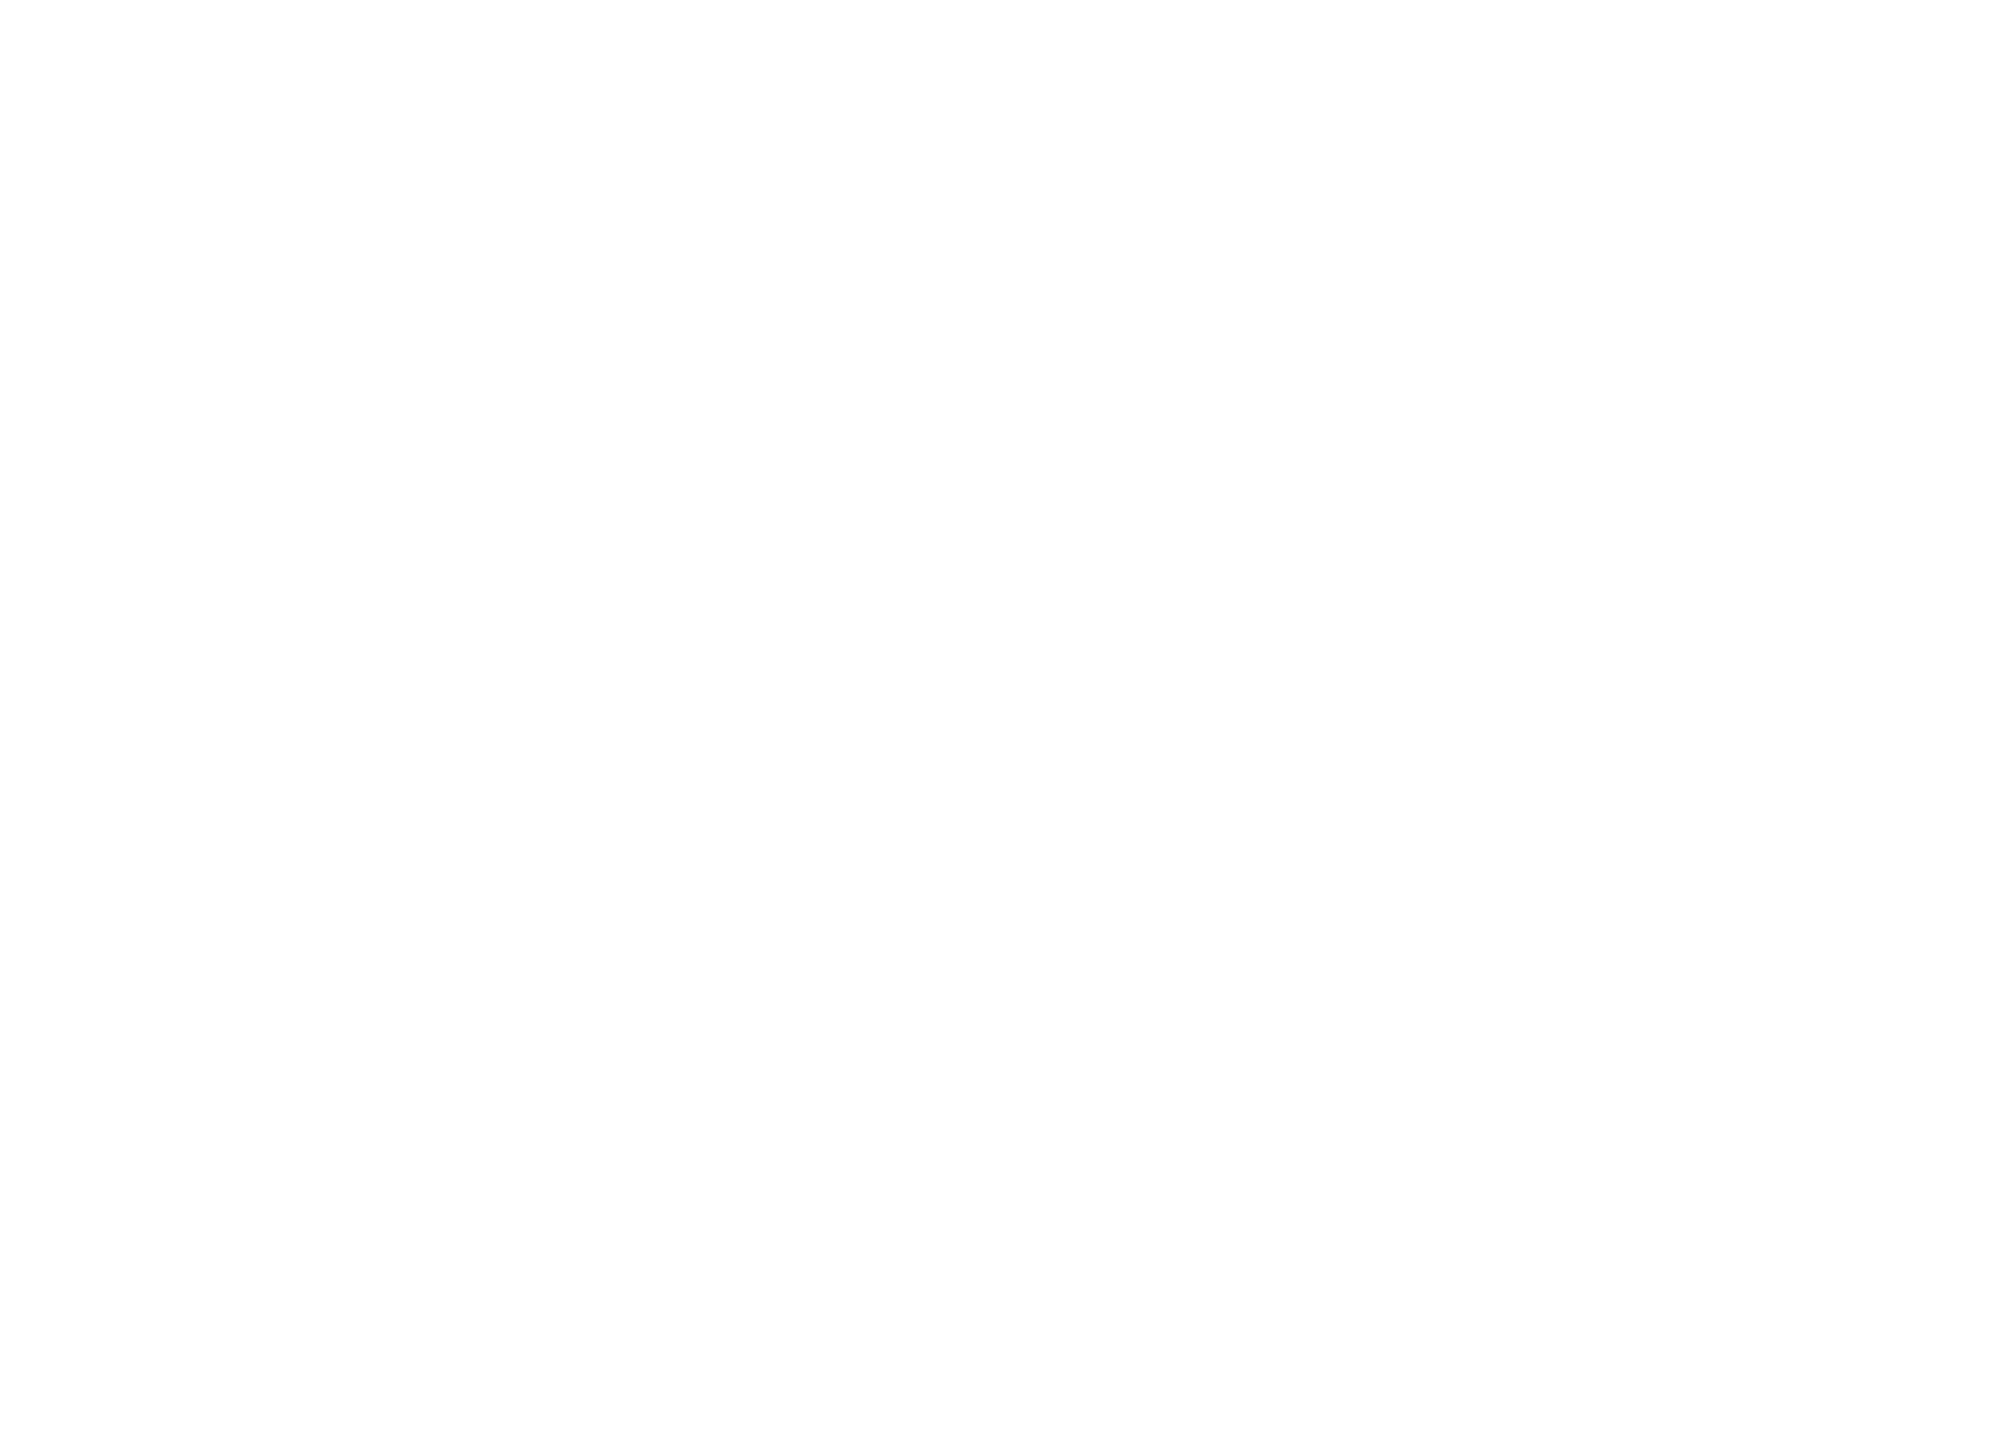 bibliotekos logo